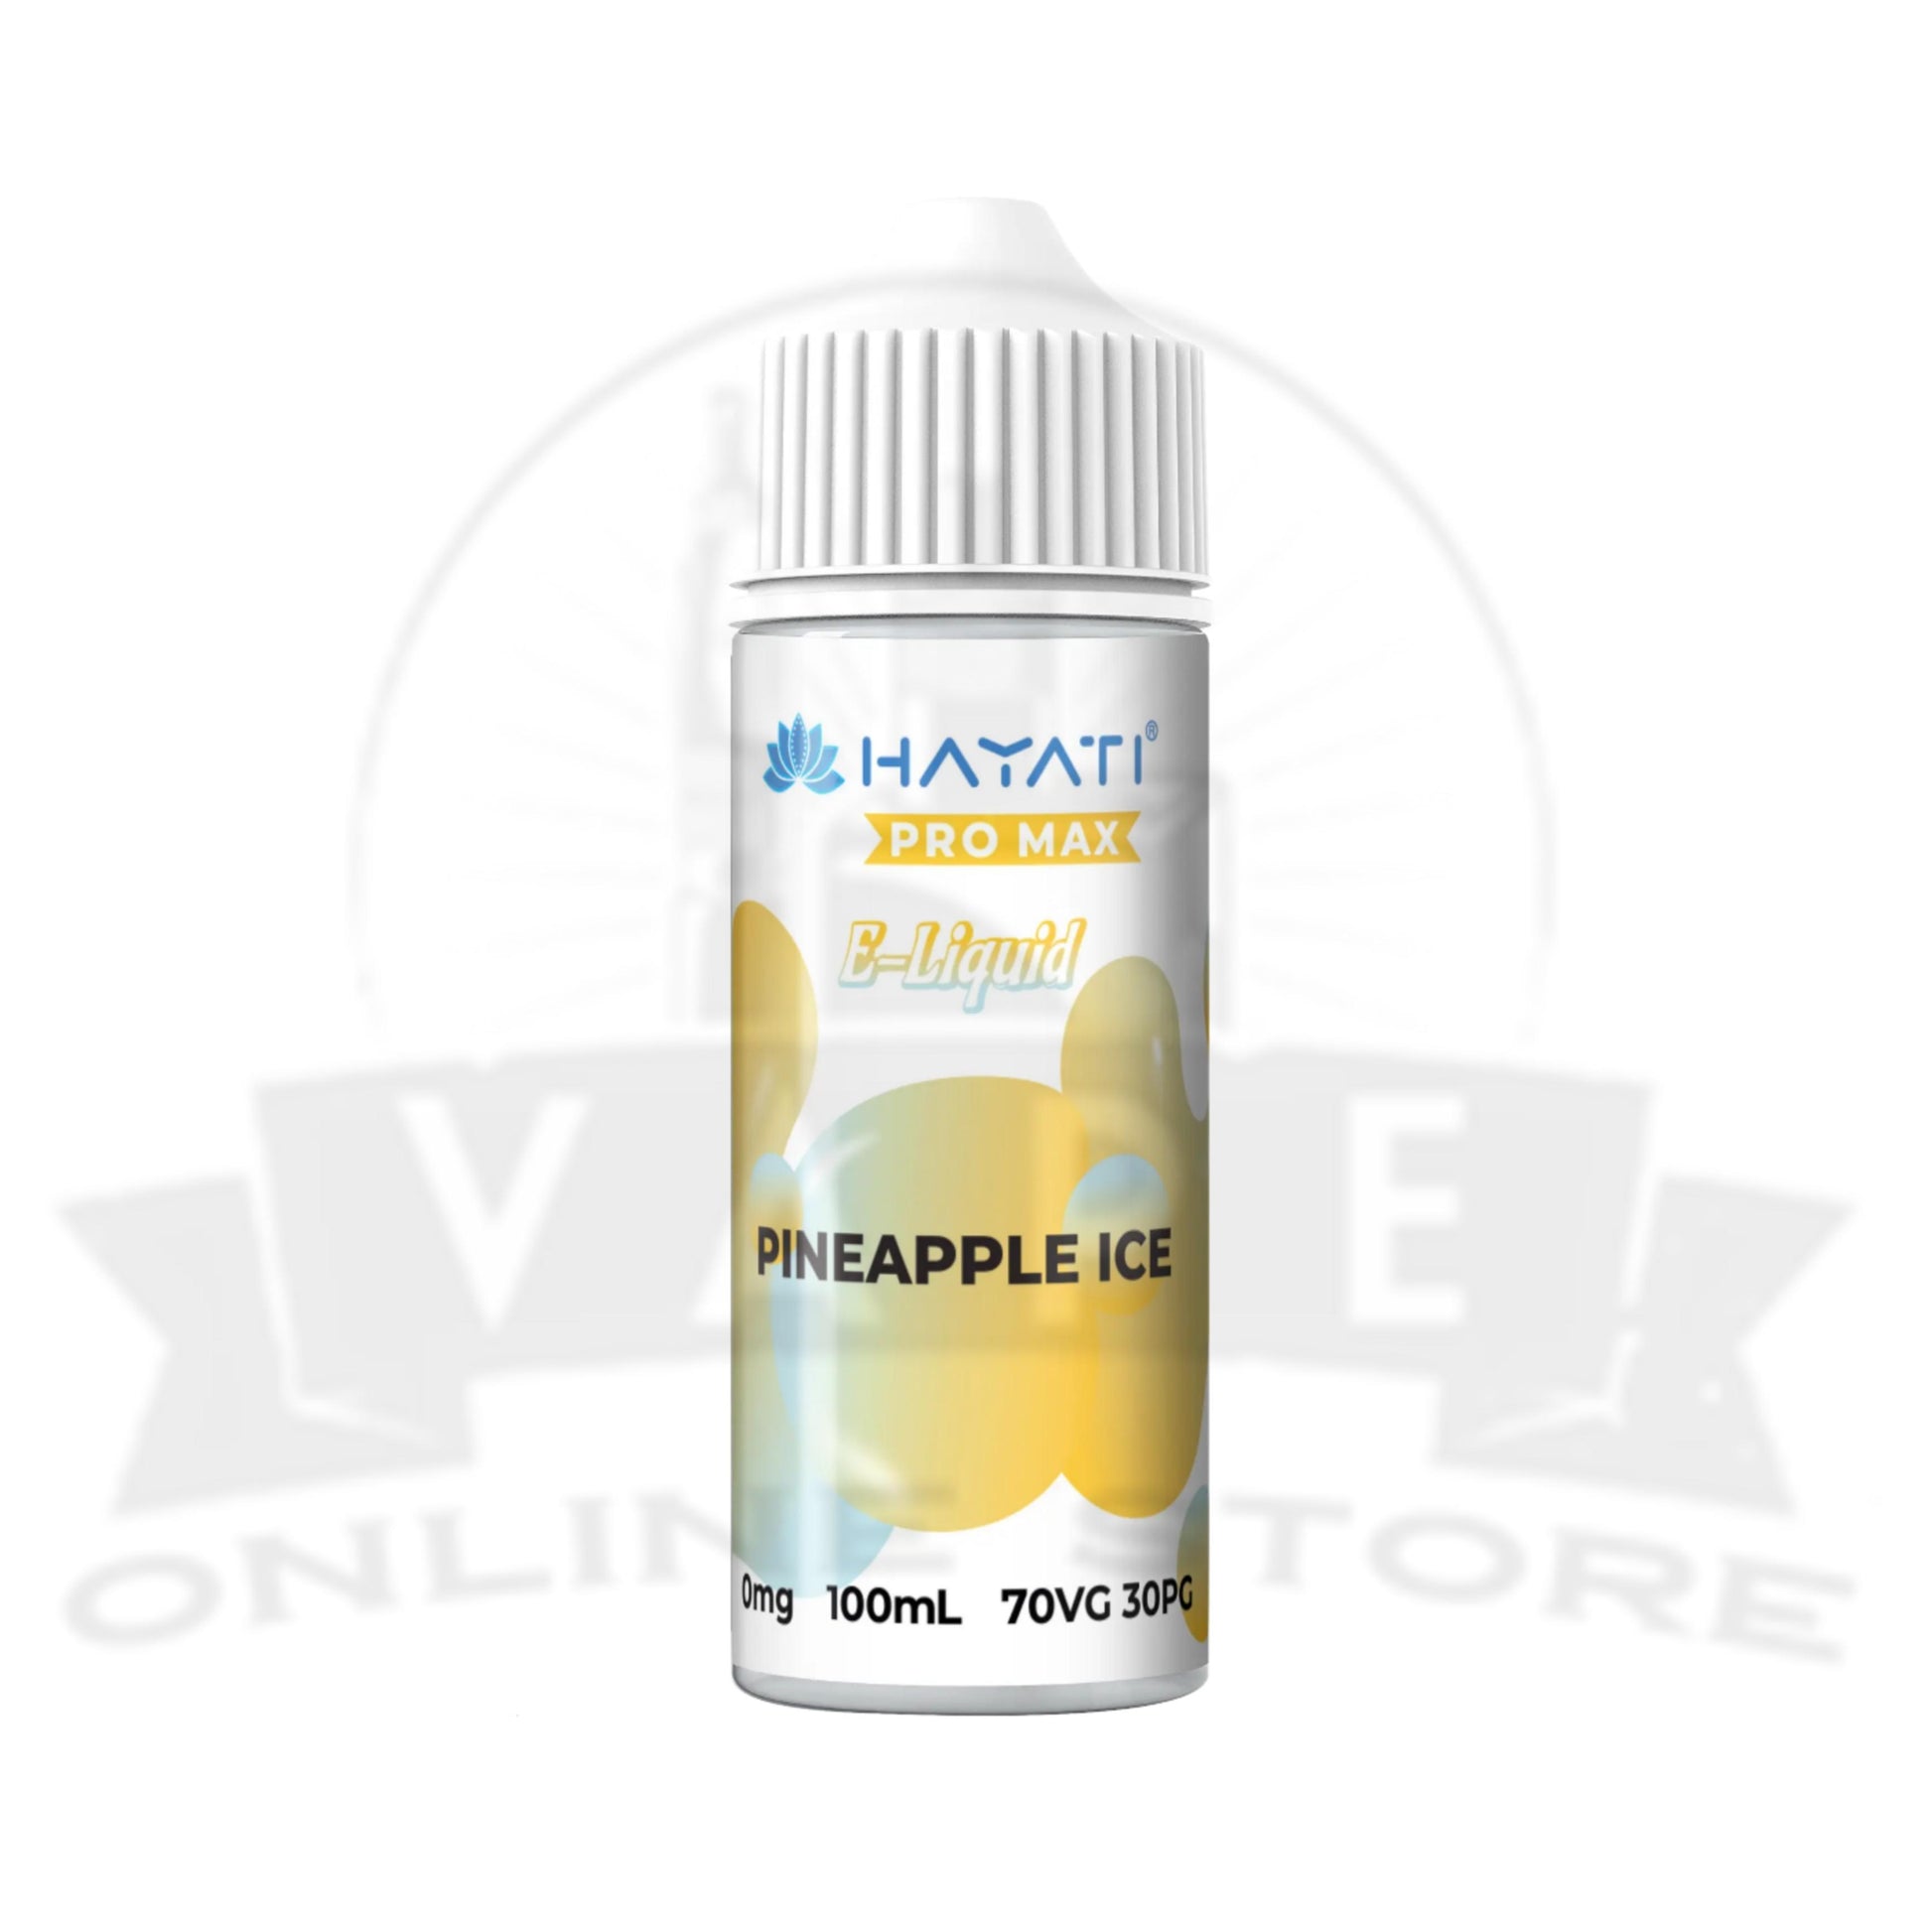 Pineapple Ice Hayati Pro Max 100ml E-Liquid Vape Juice | Full Stock